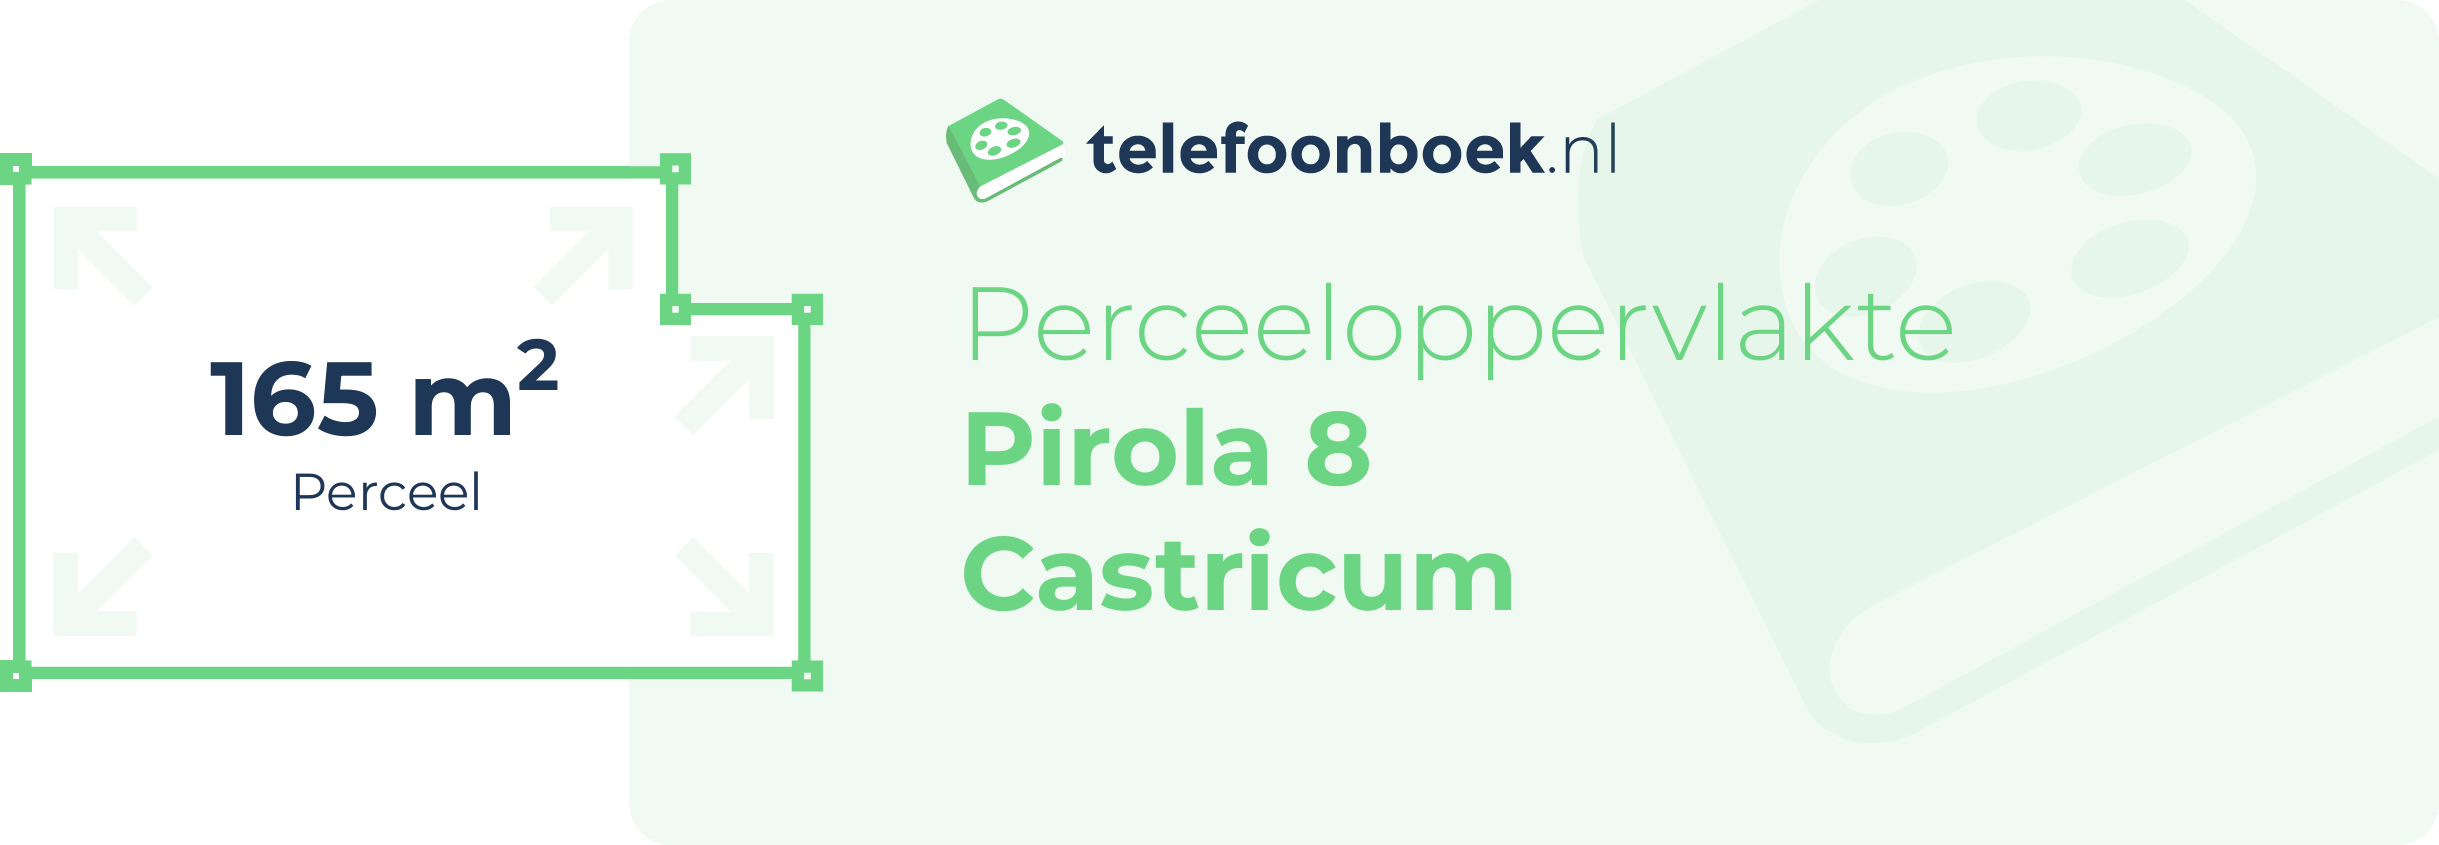 Perceeloppervlakte Pirola 8 Castricum